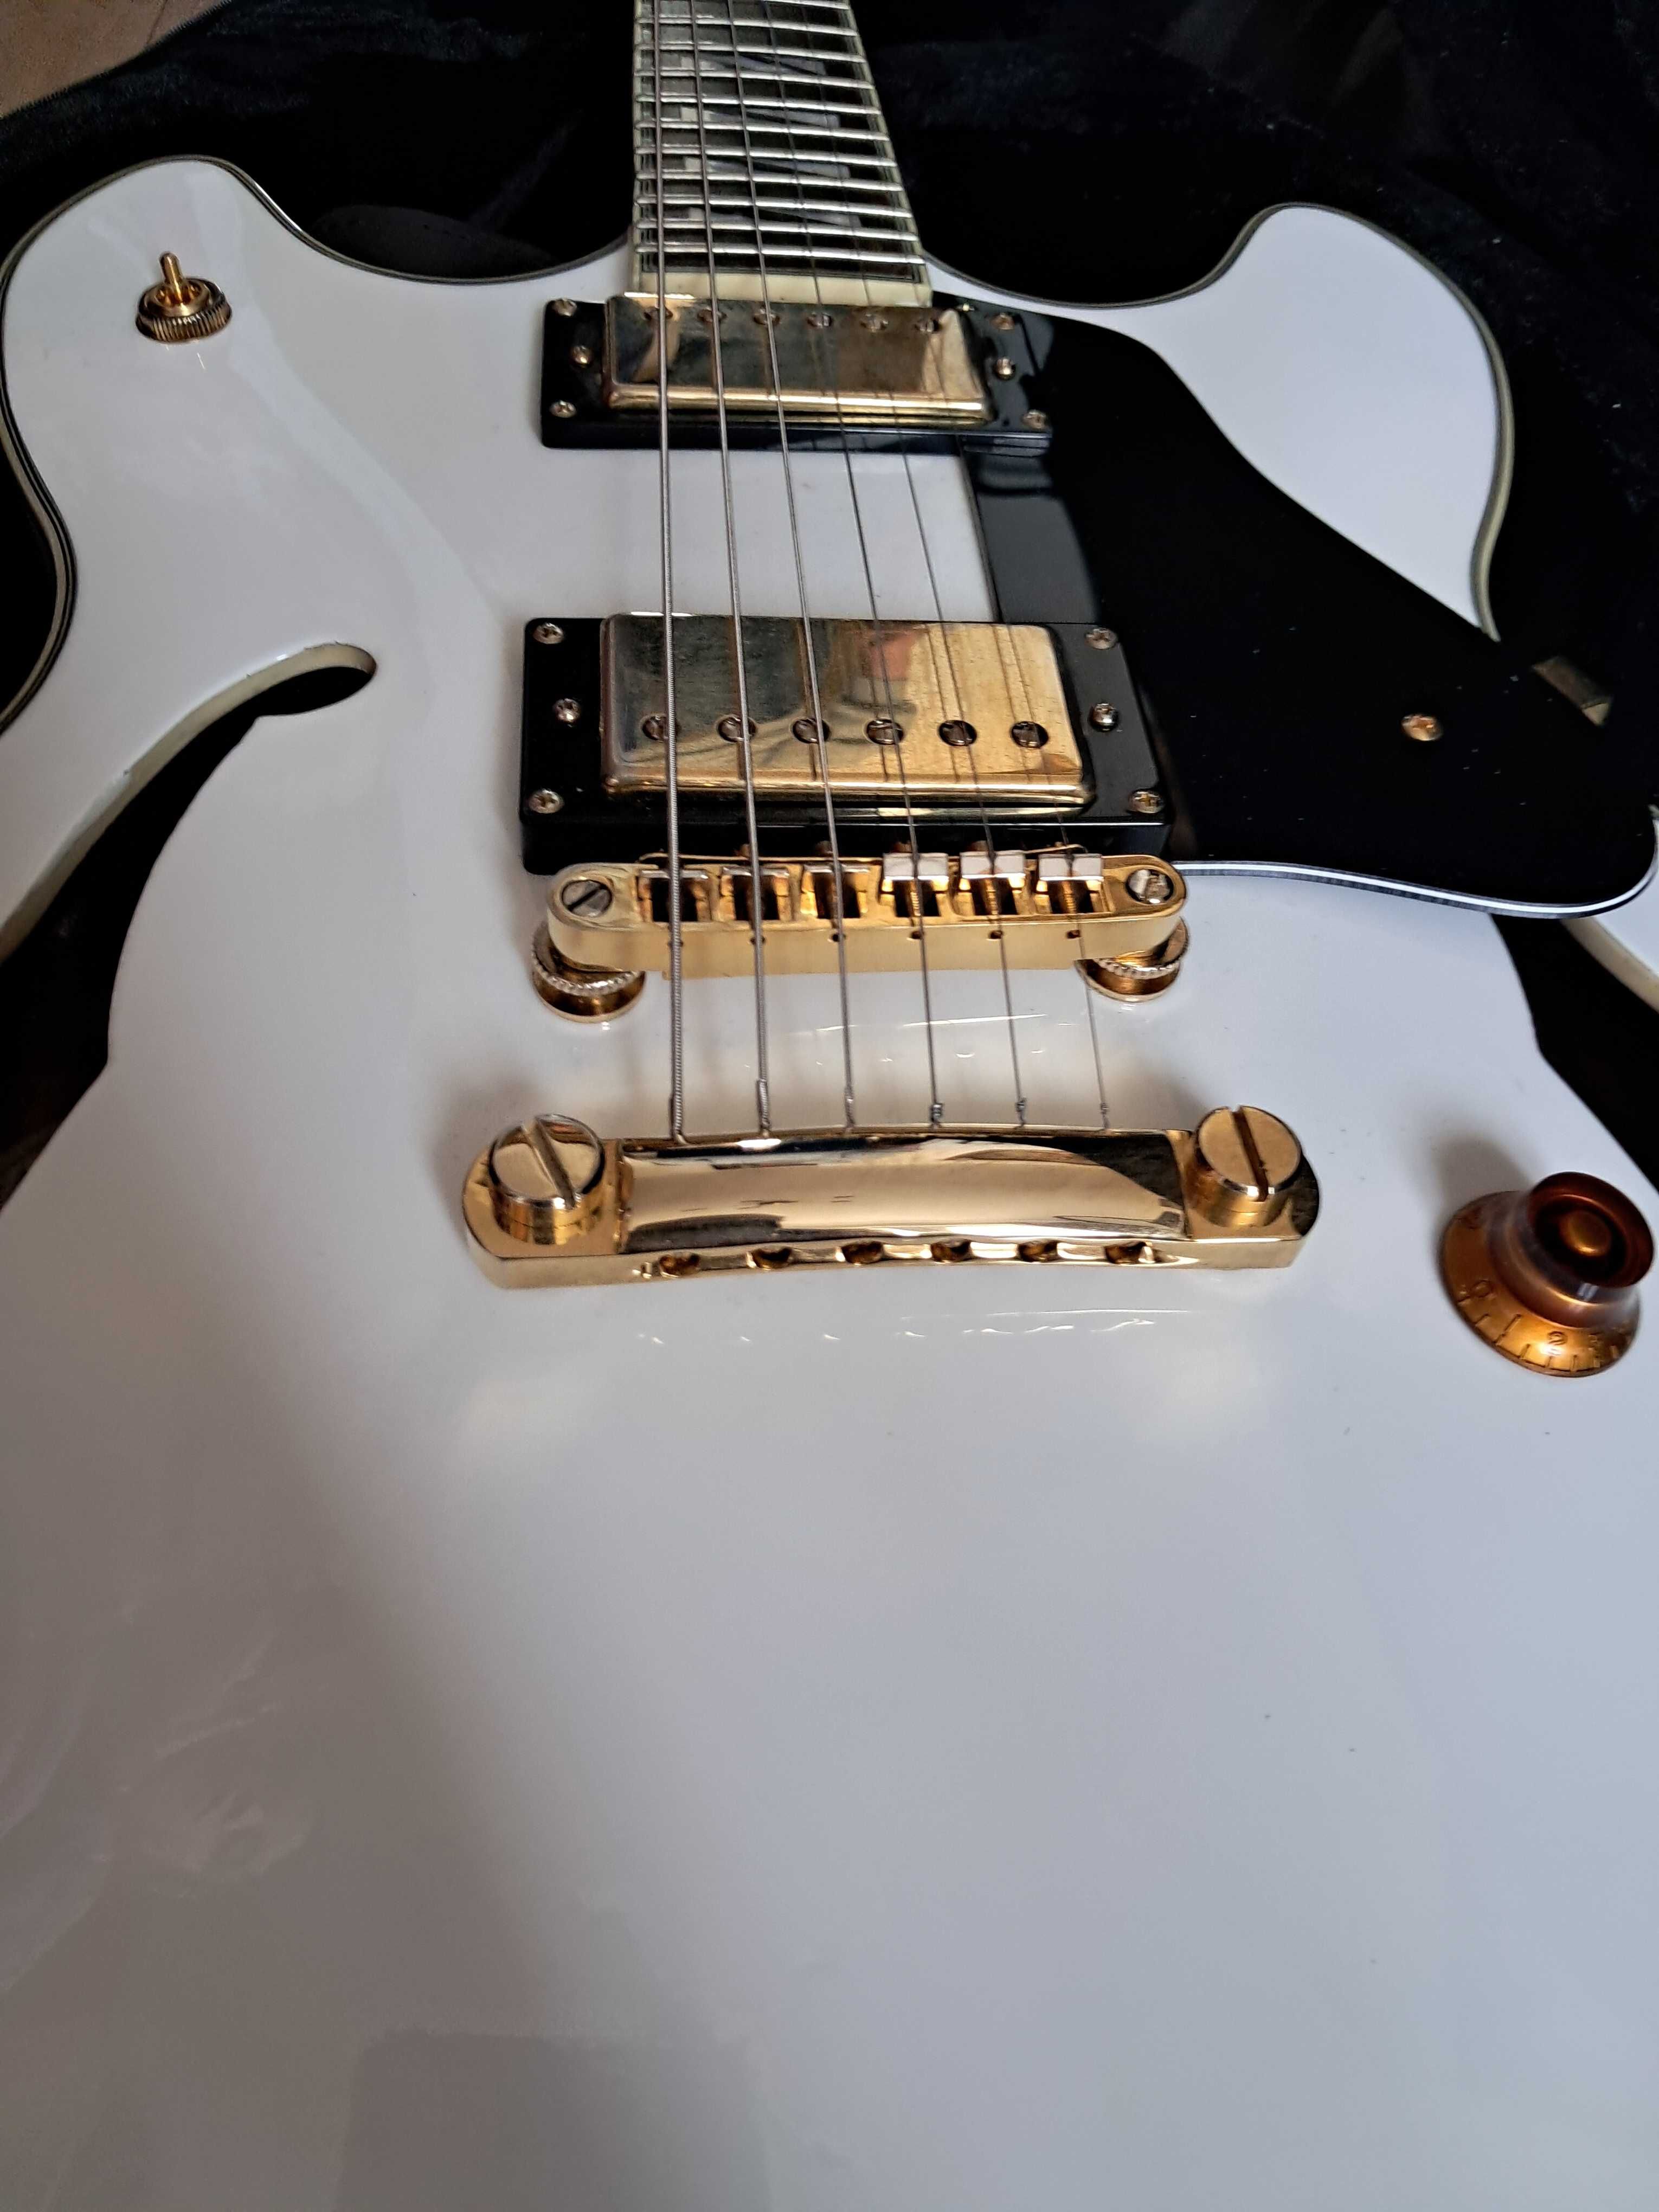 Gitara elektryczna Epiphone Washburn typu hollow